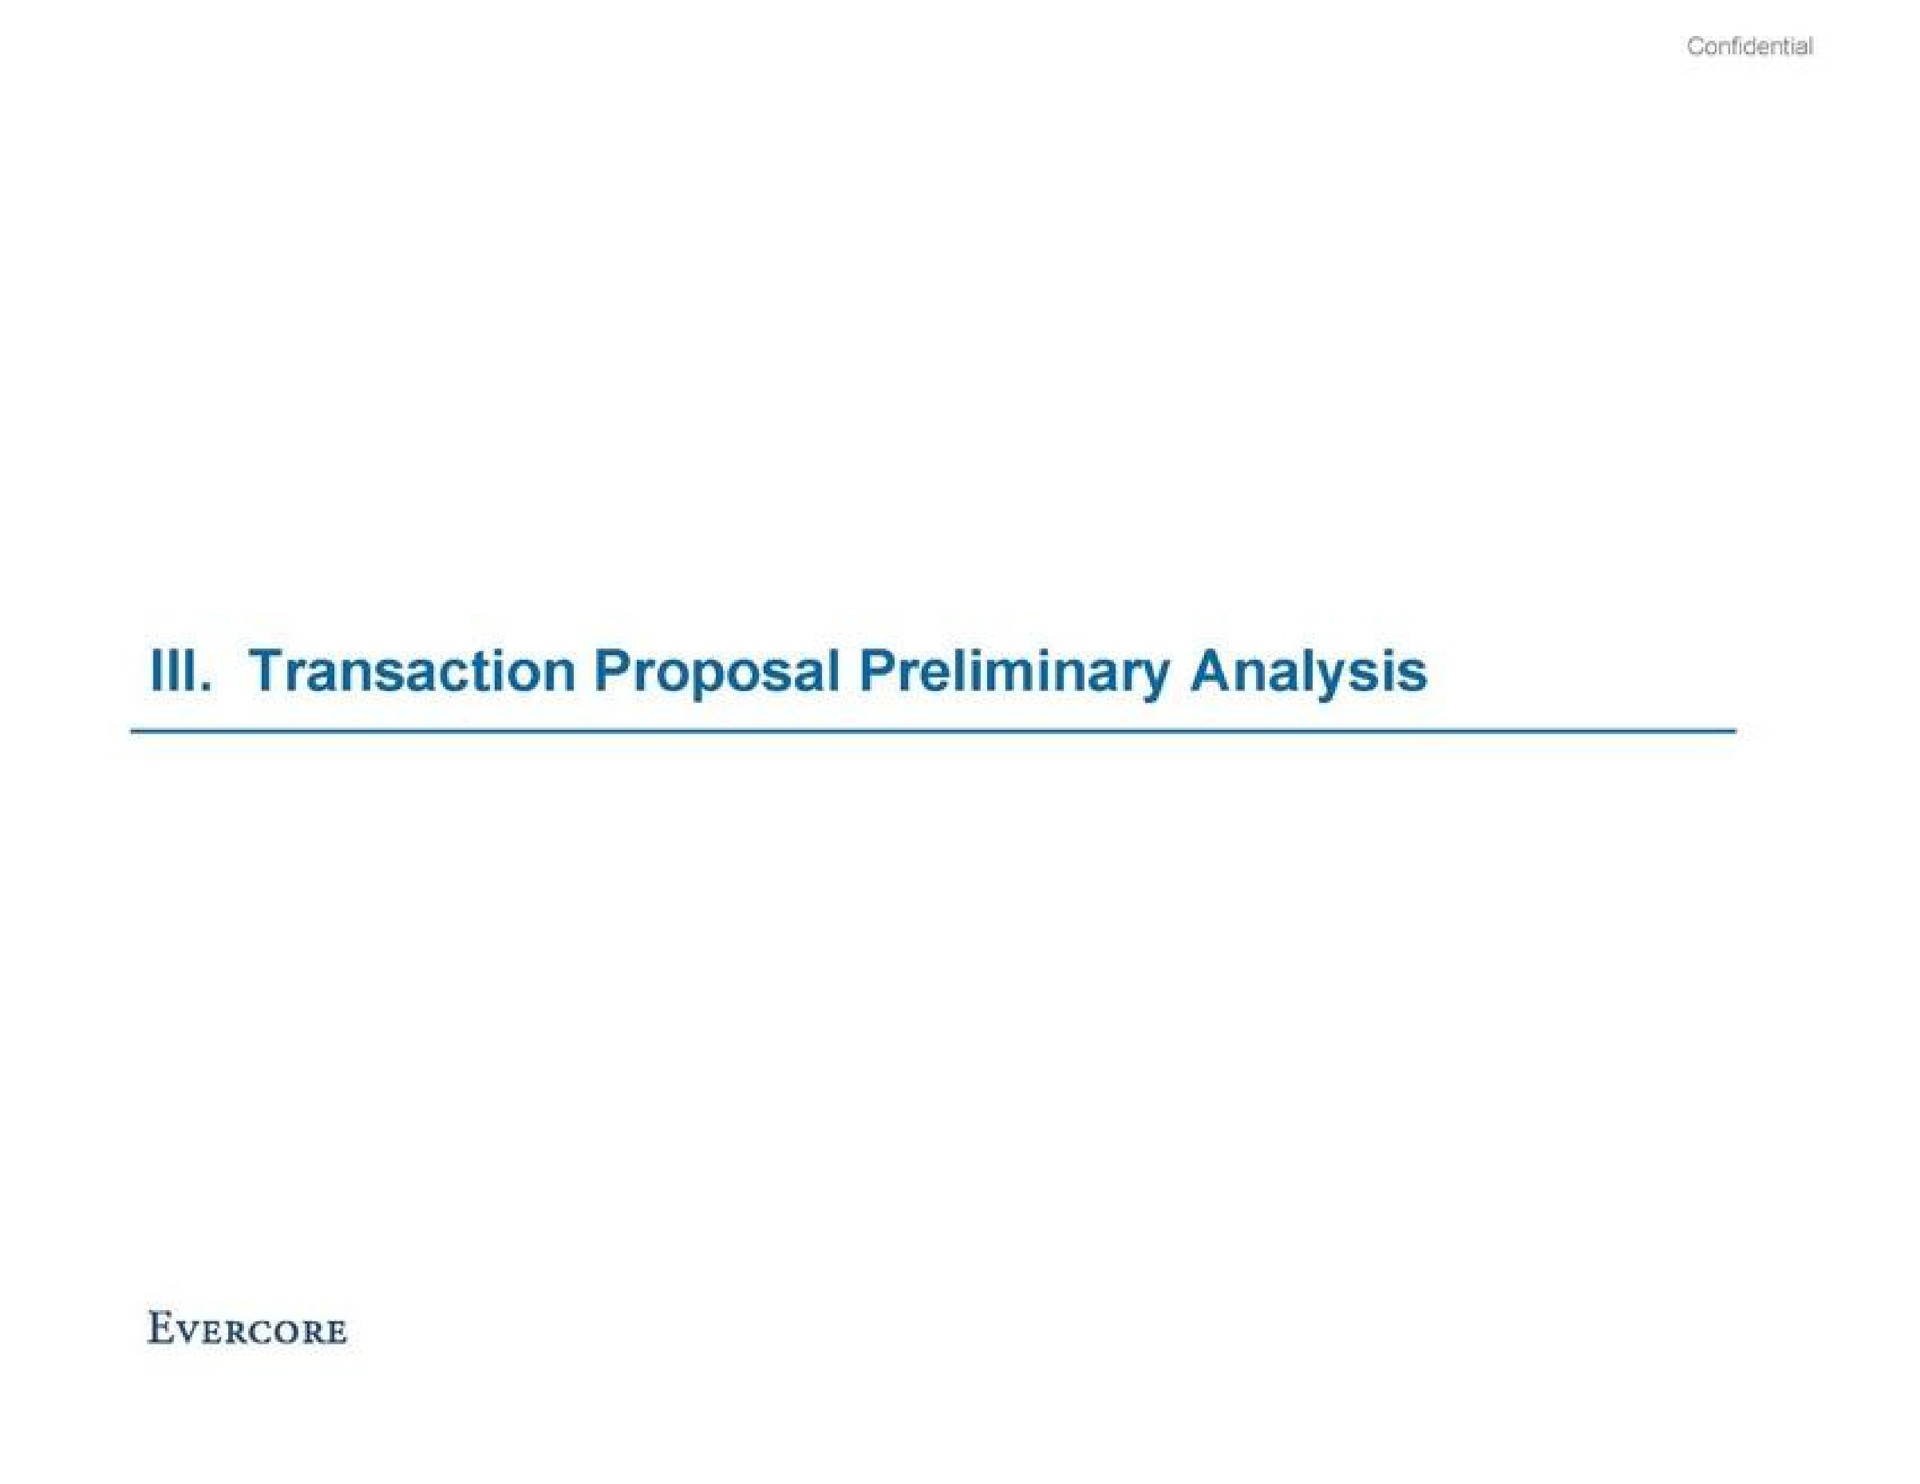 transaction proposal preliminary analysis | Evercore